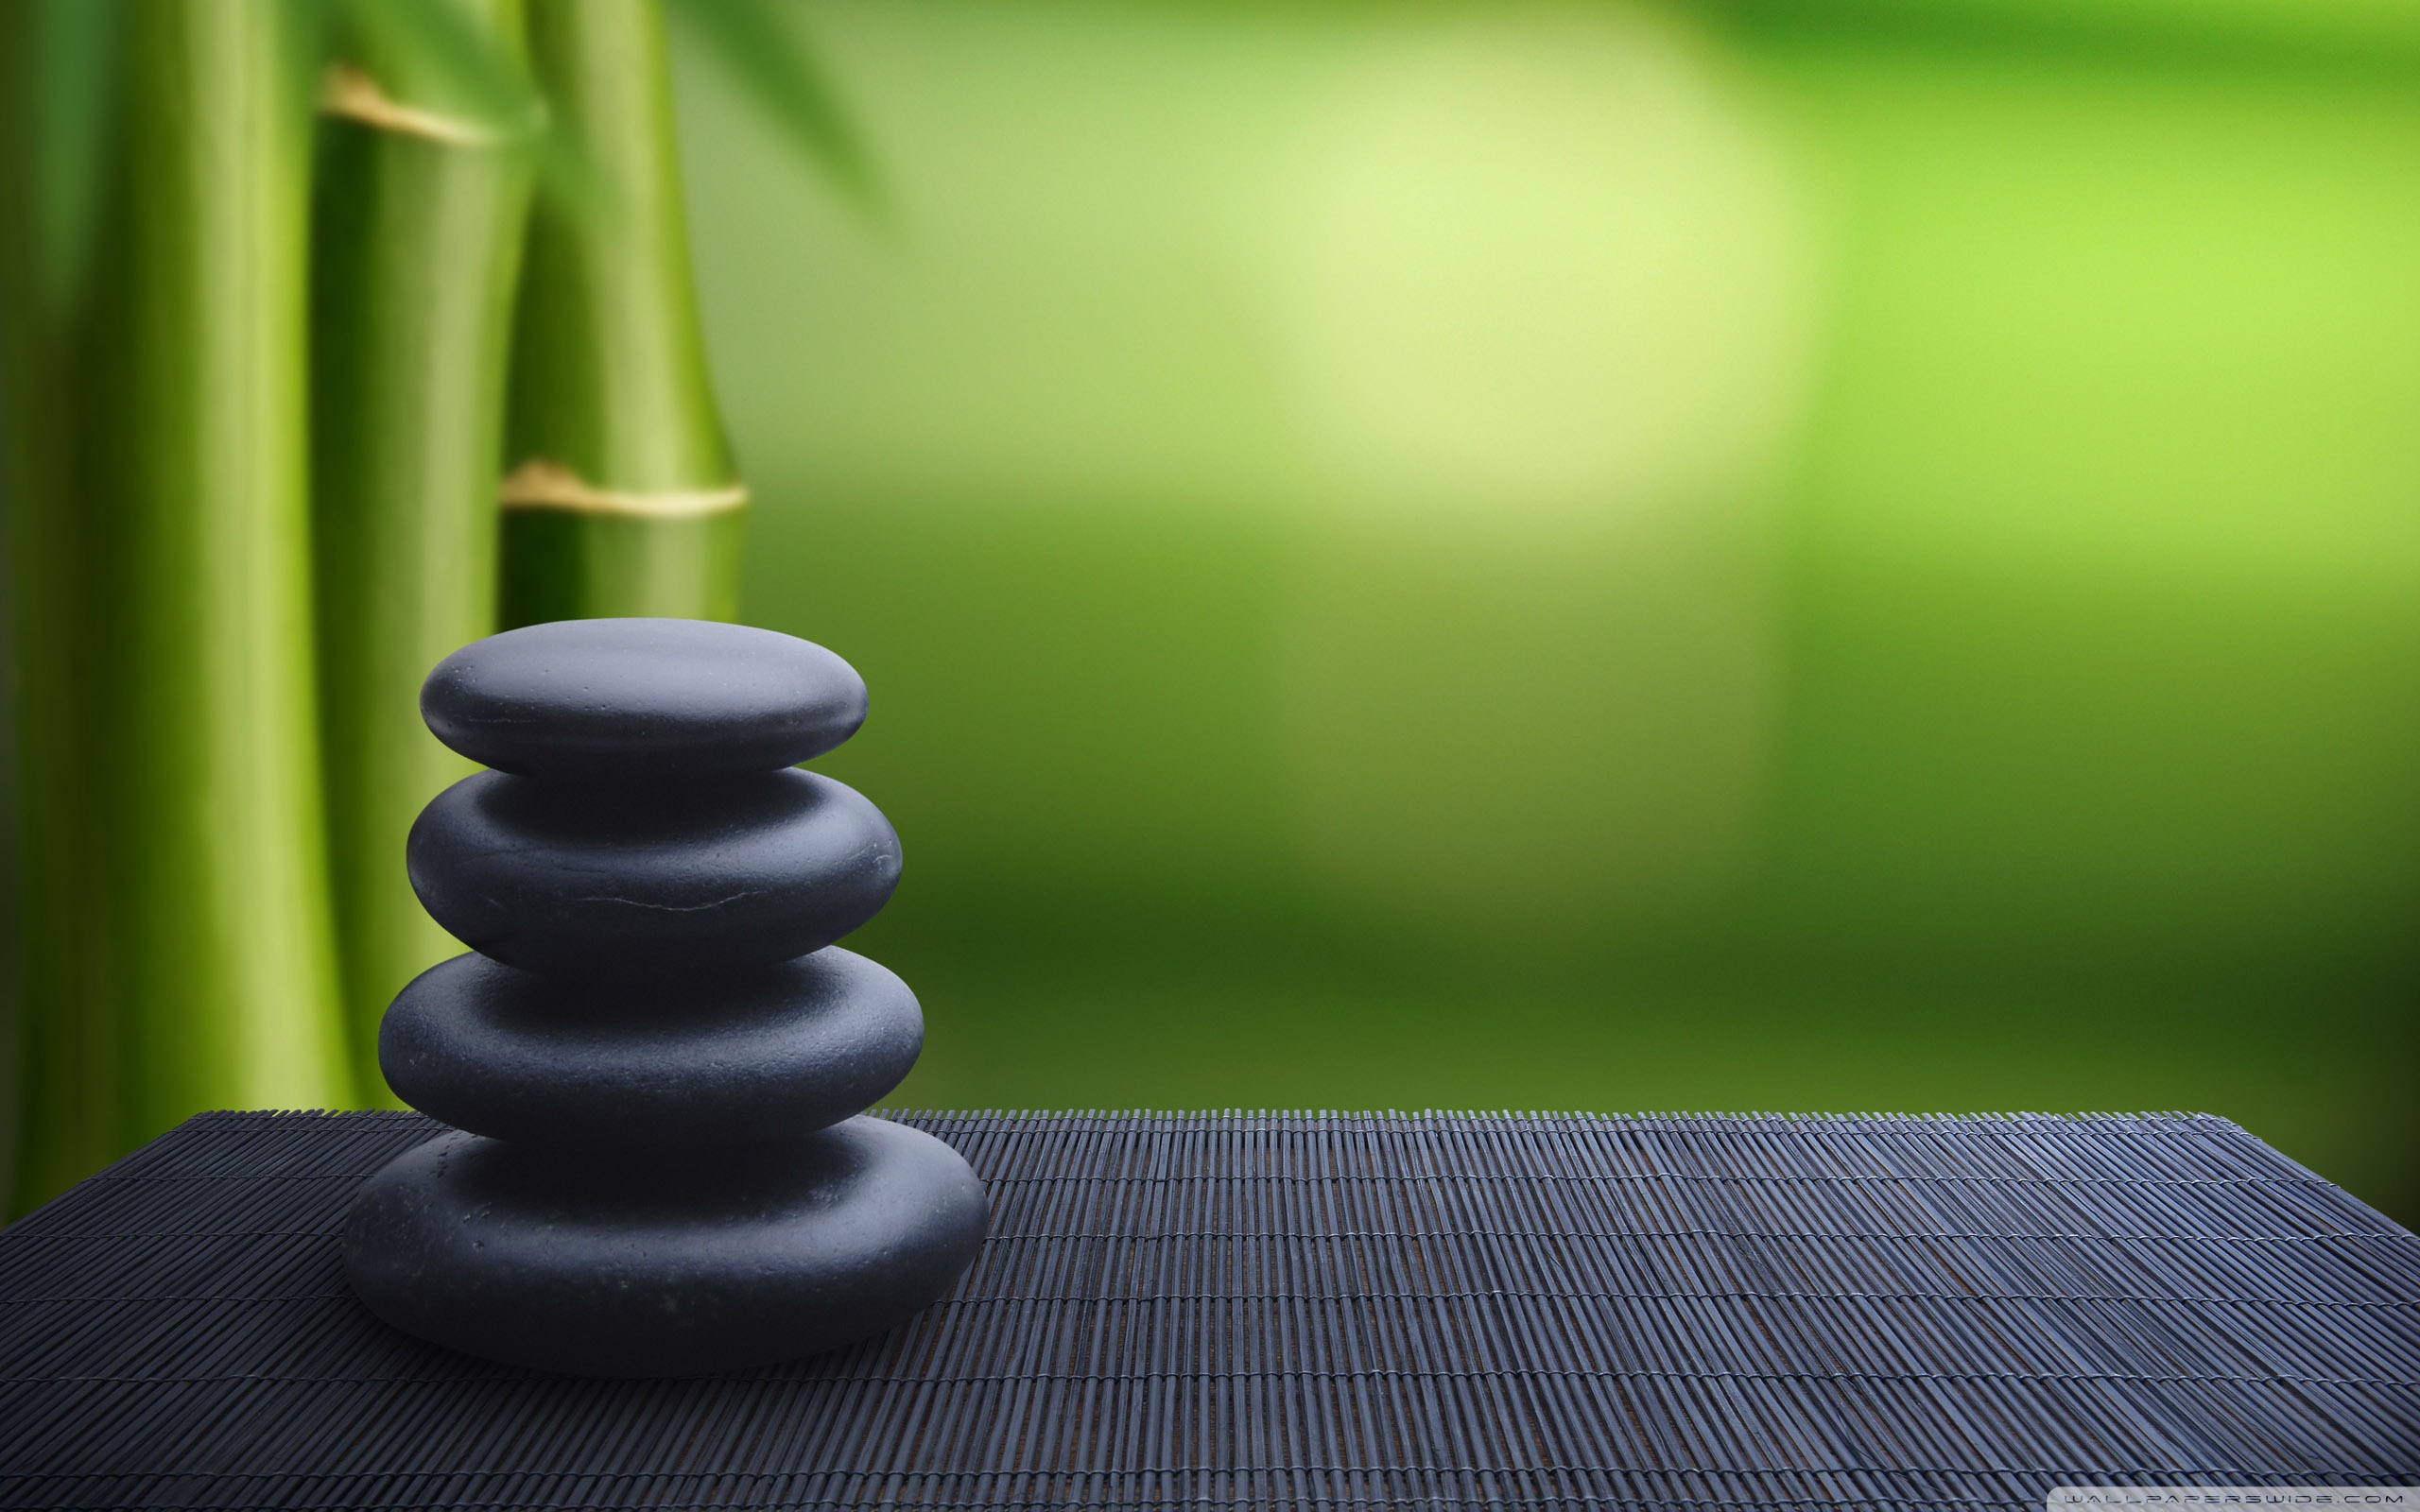 Zen Stones Background HD desktop wallpaper : High Definition ...